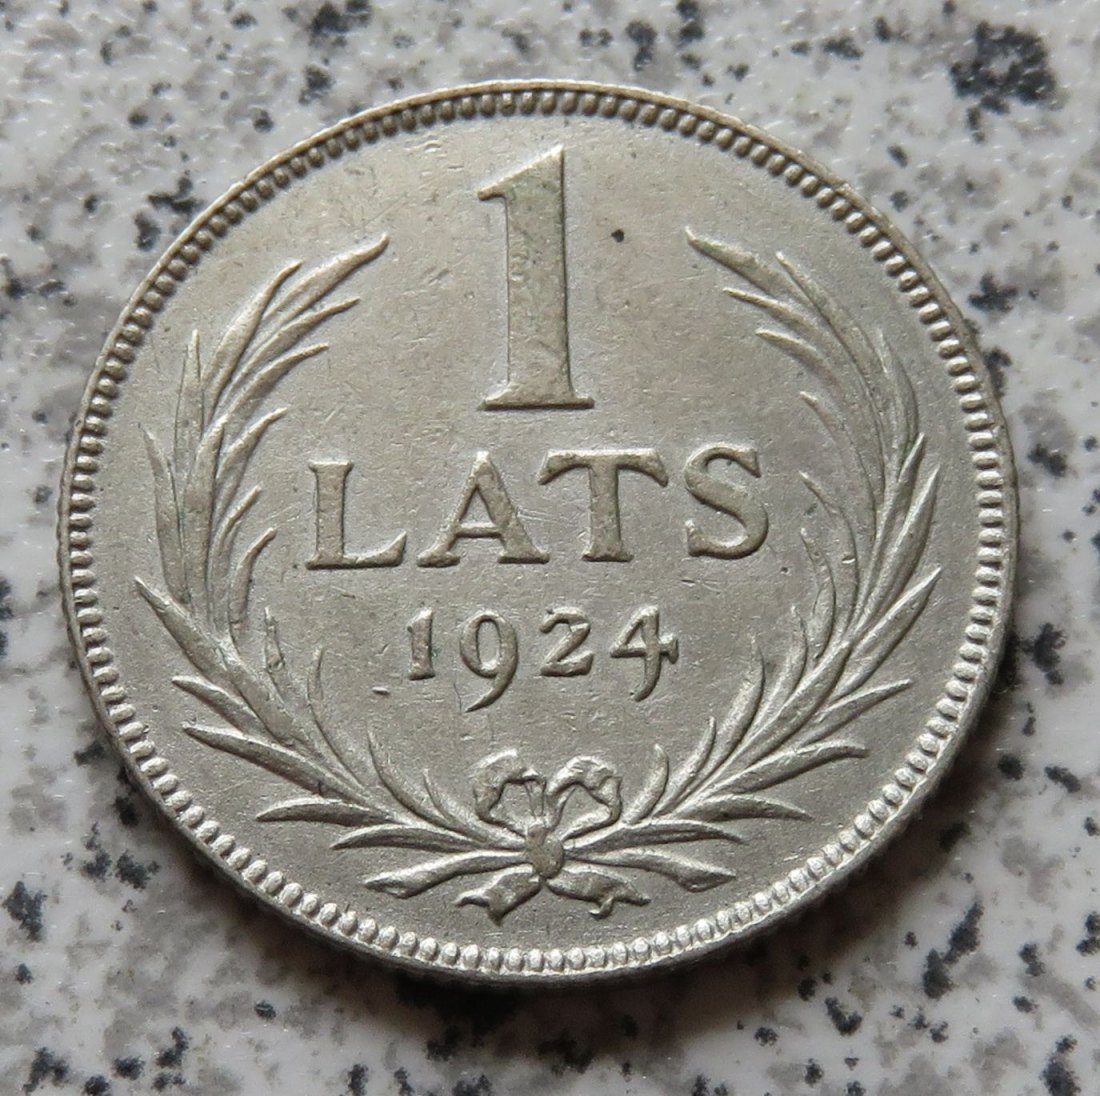  Lettland 1 Lats 1924   